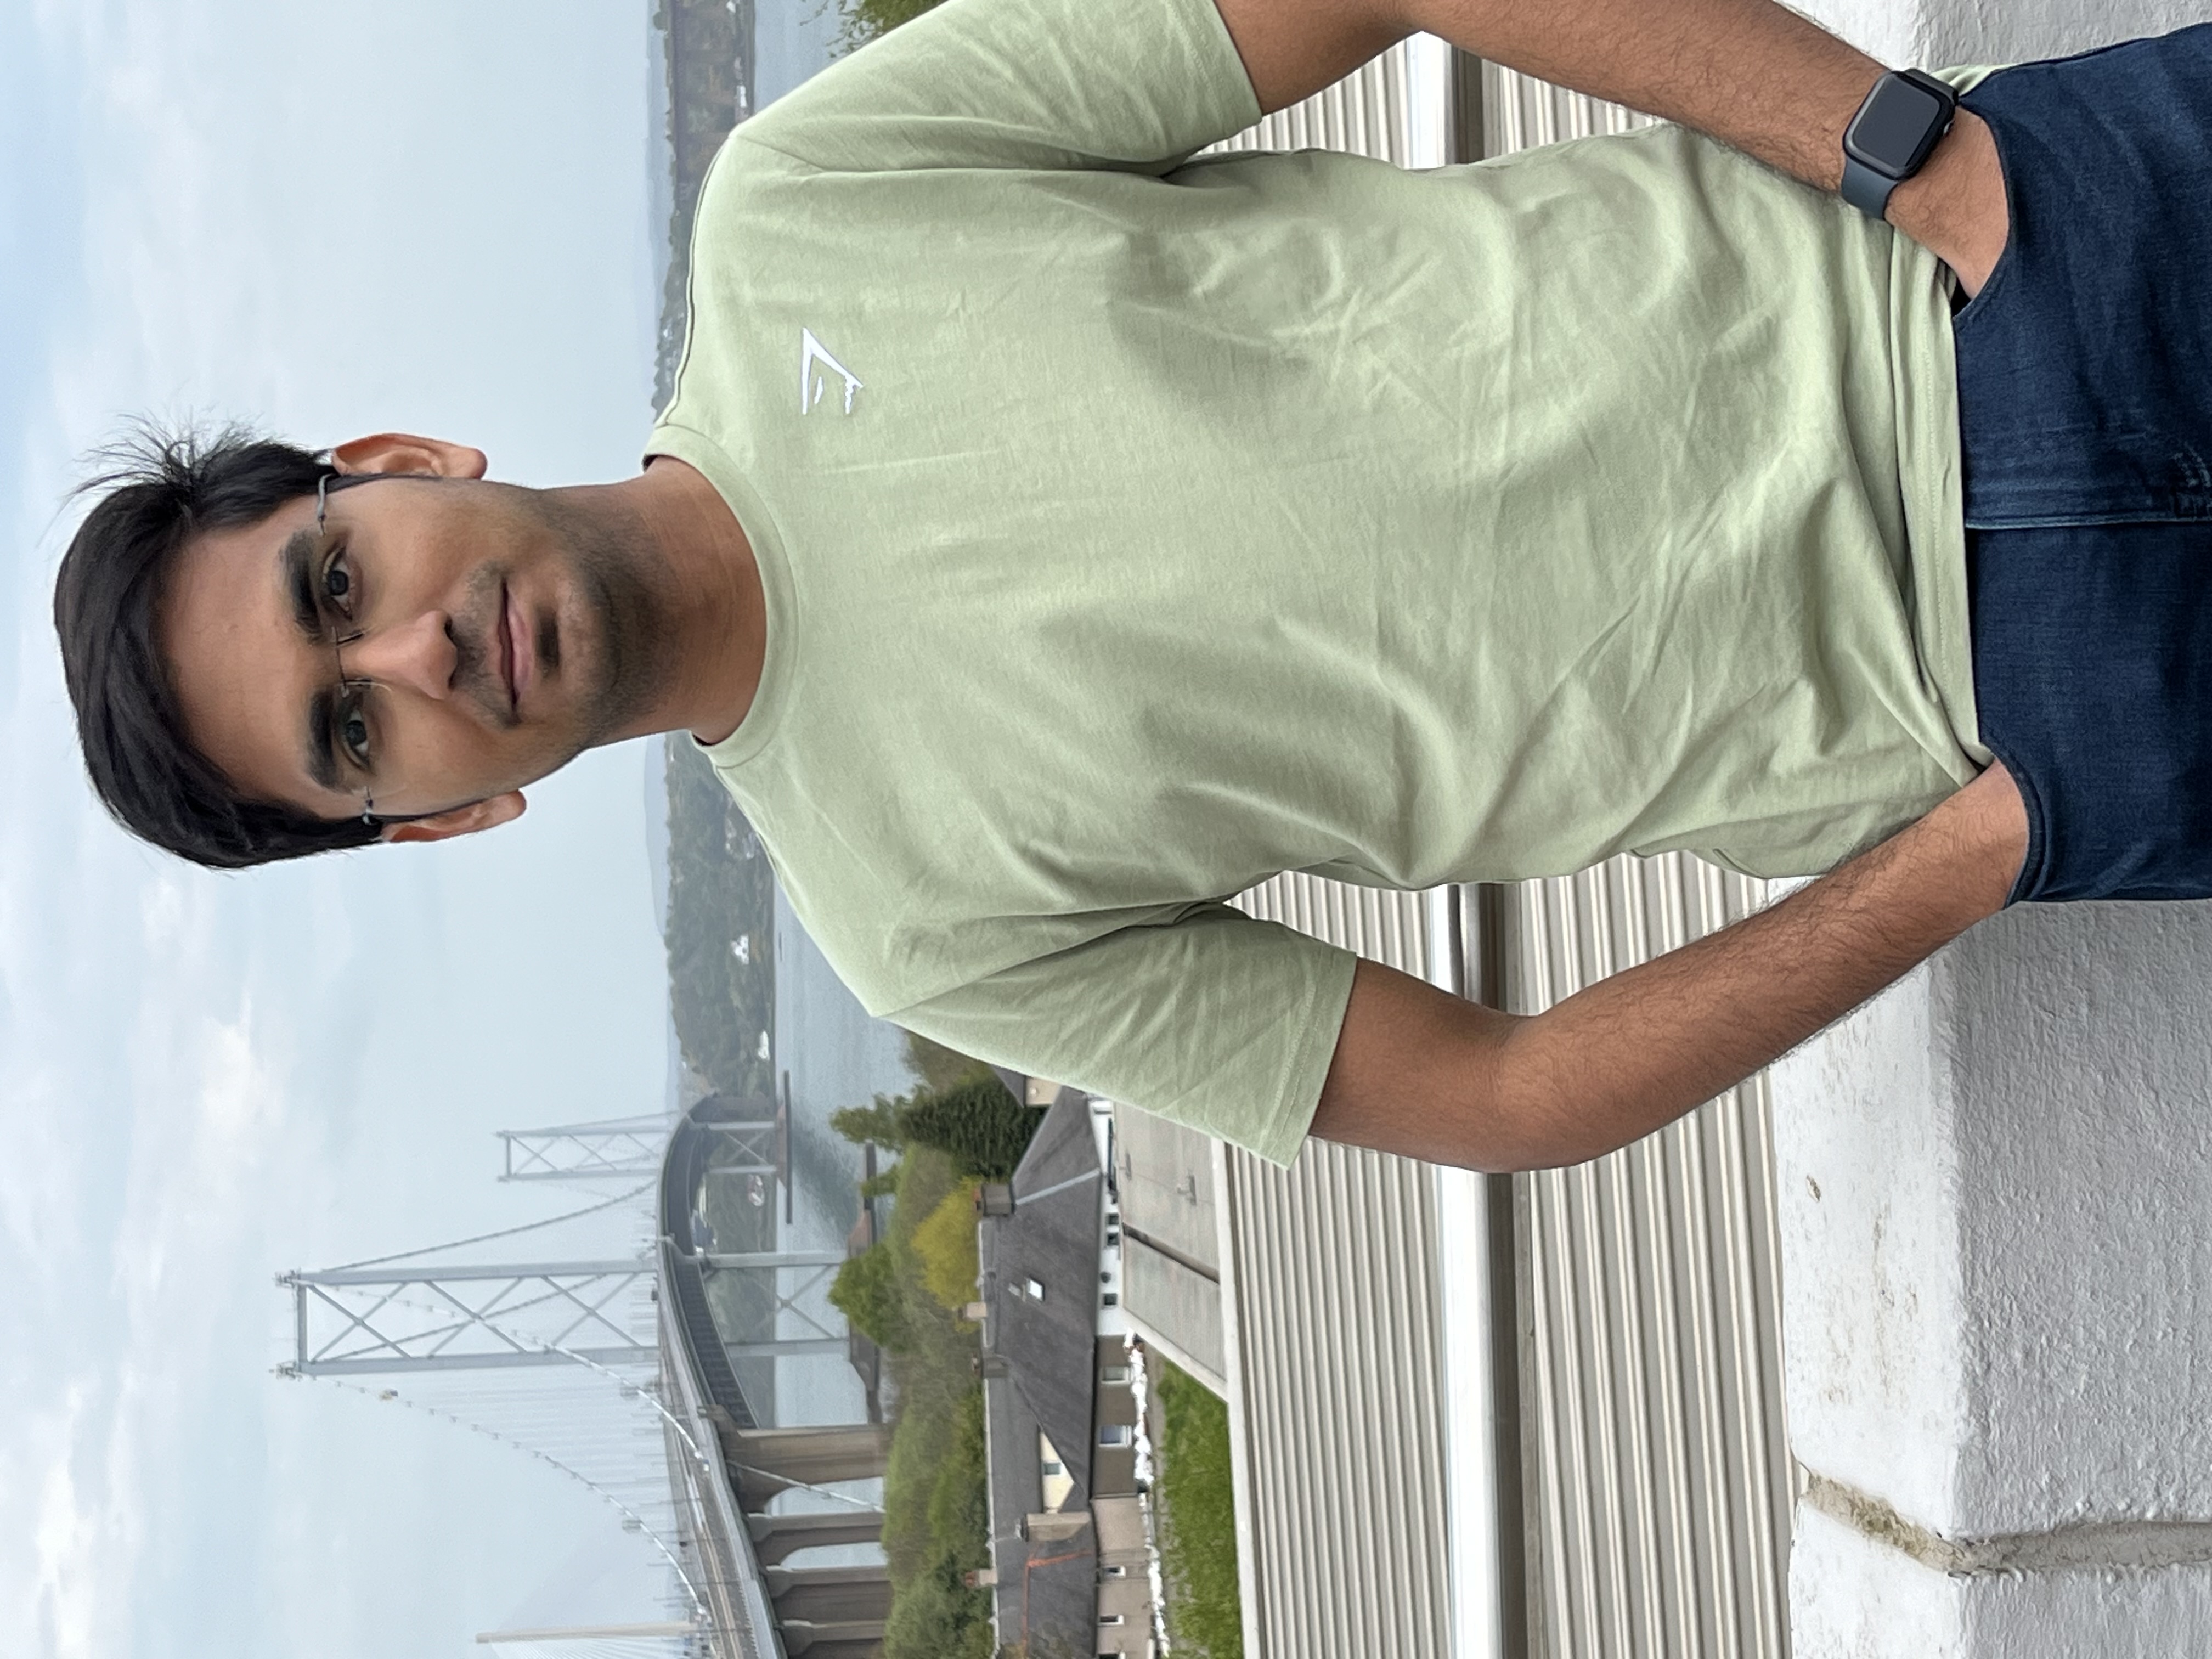 Dinesh Sonachalam, Full stack Developer